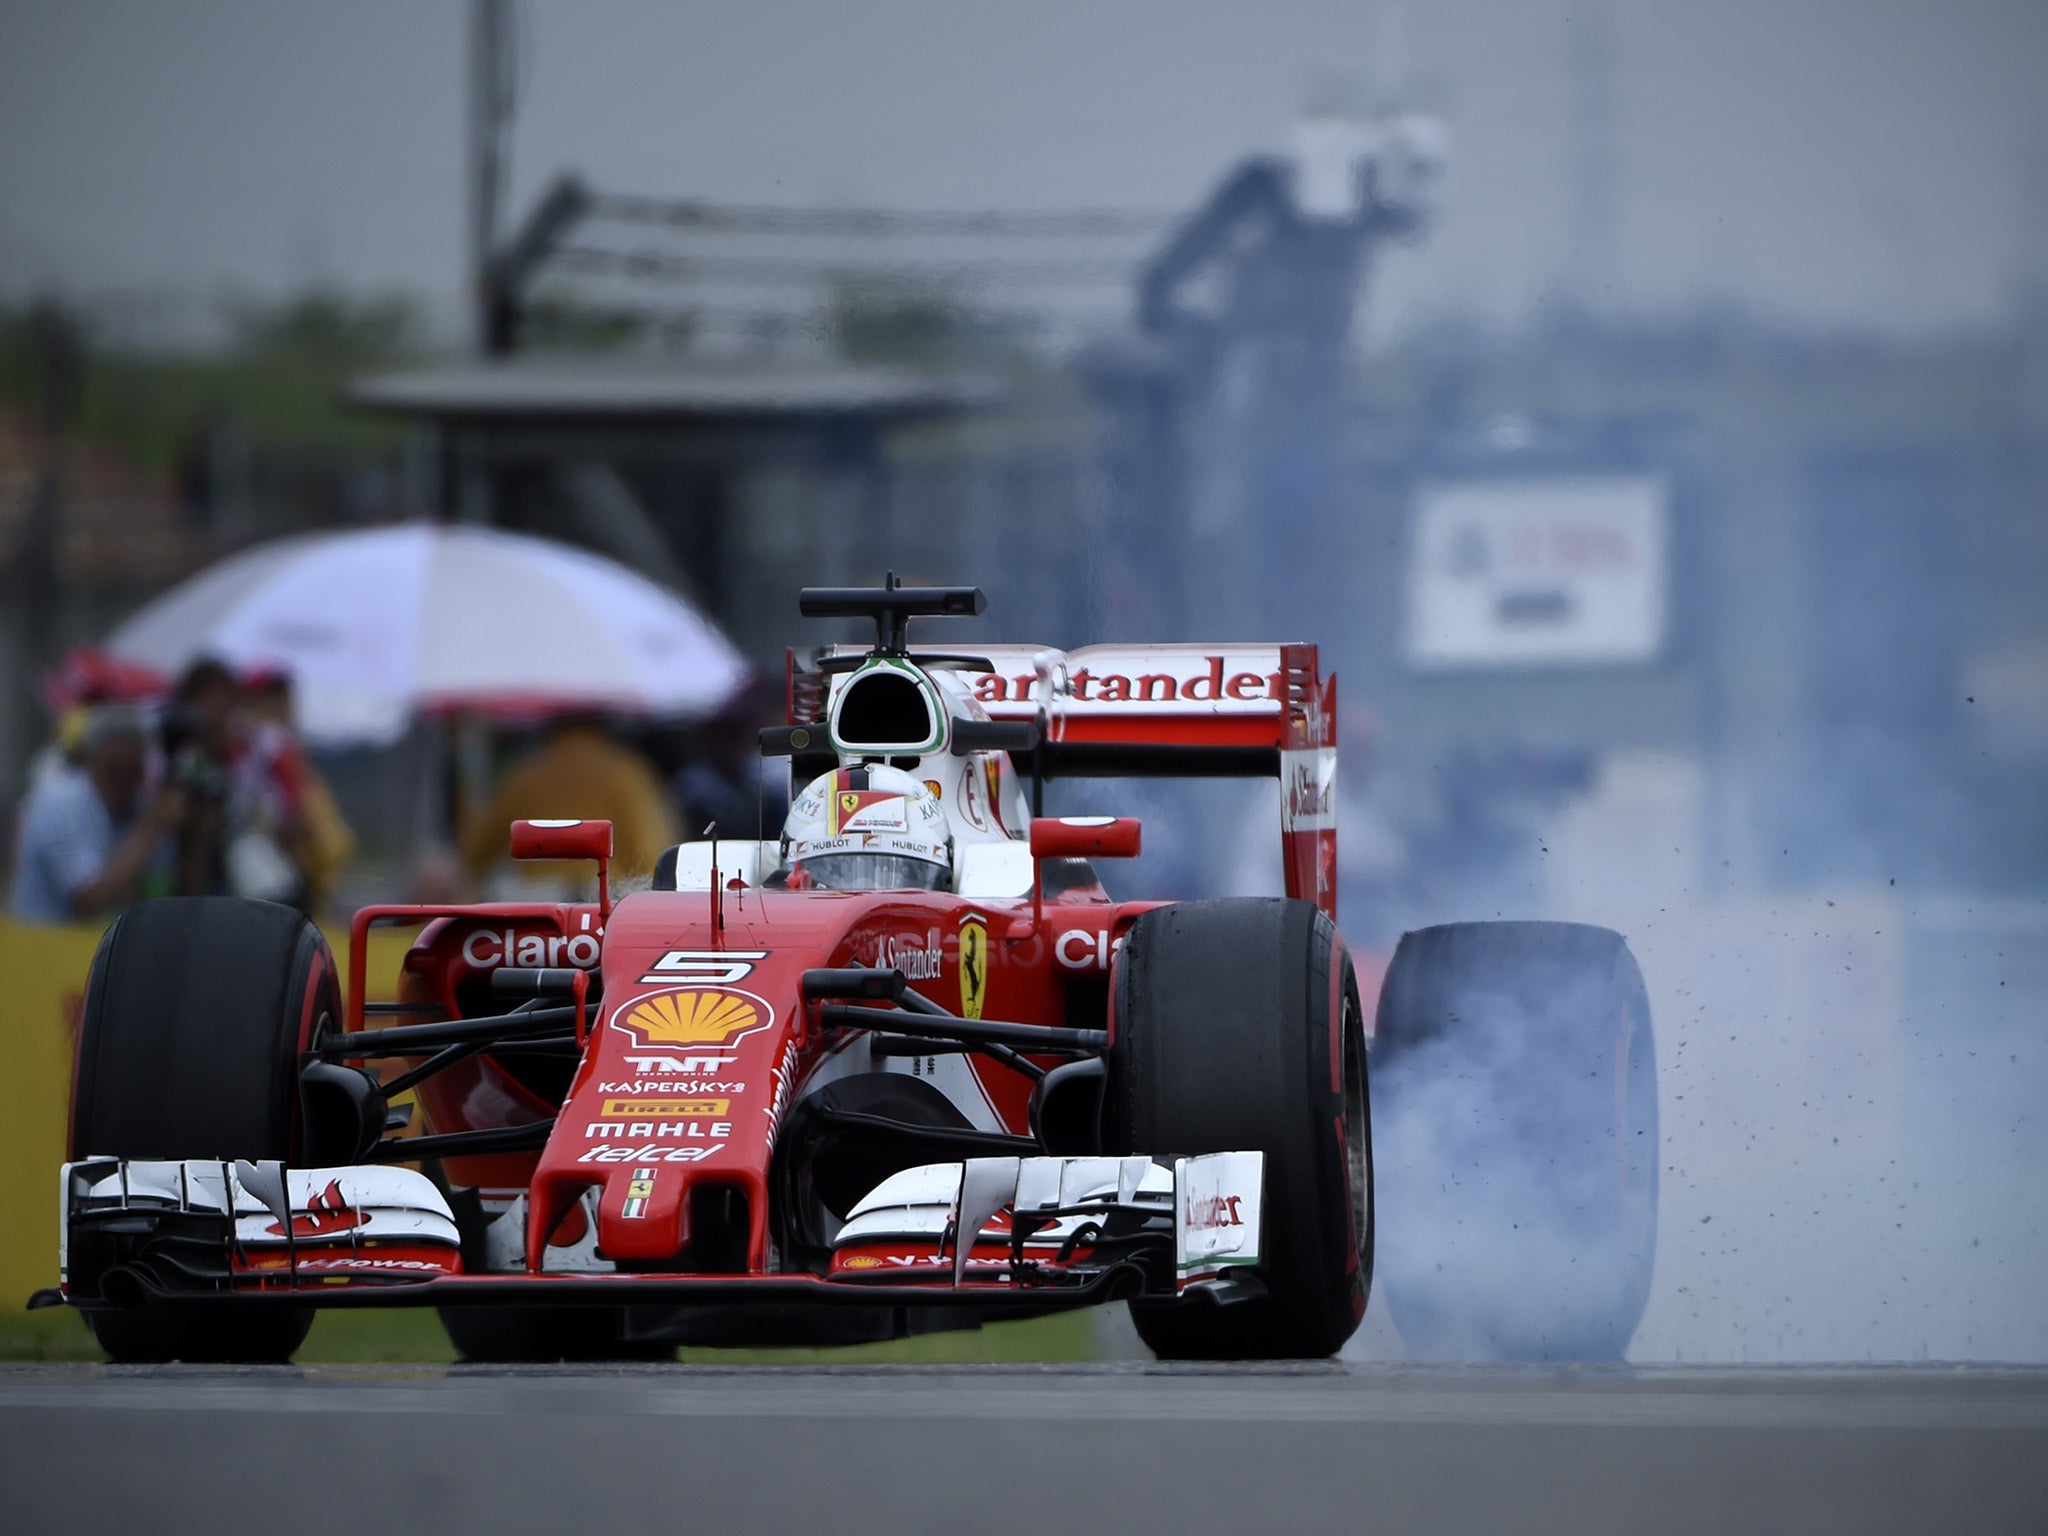 Sebastian Vettel followed his Ferrari team-mate in second